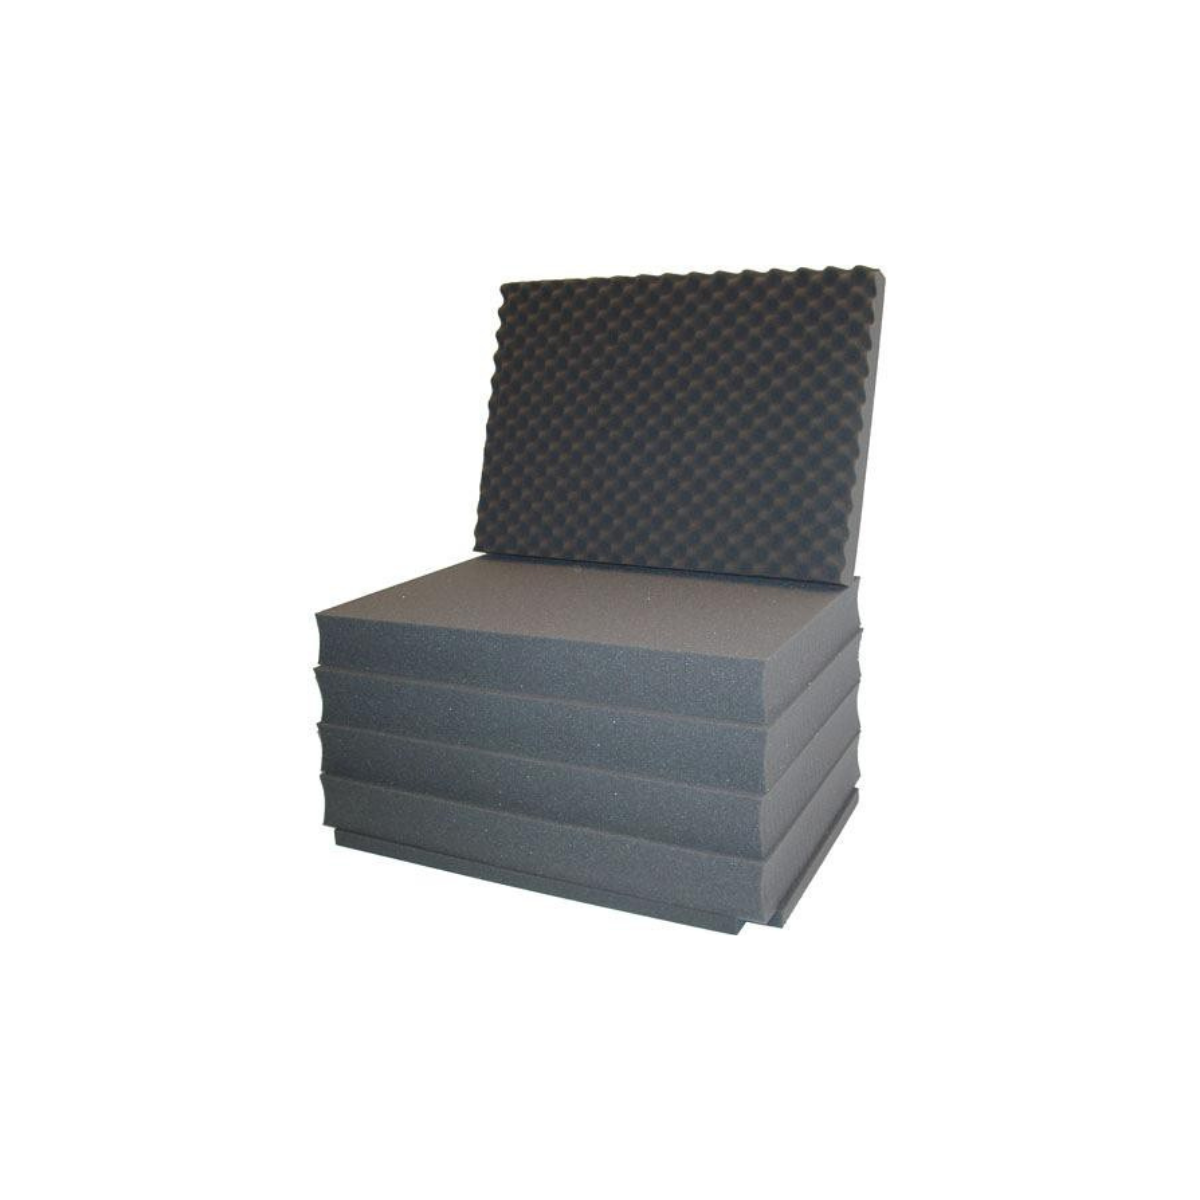 Porta Brace PB-2400FP Hard Case, Foam Interior, Airtight, Small